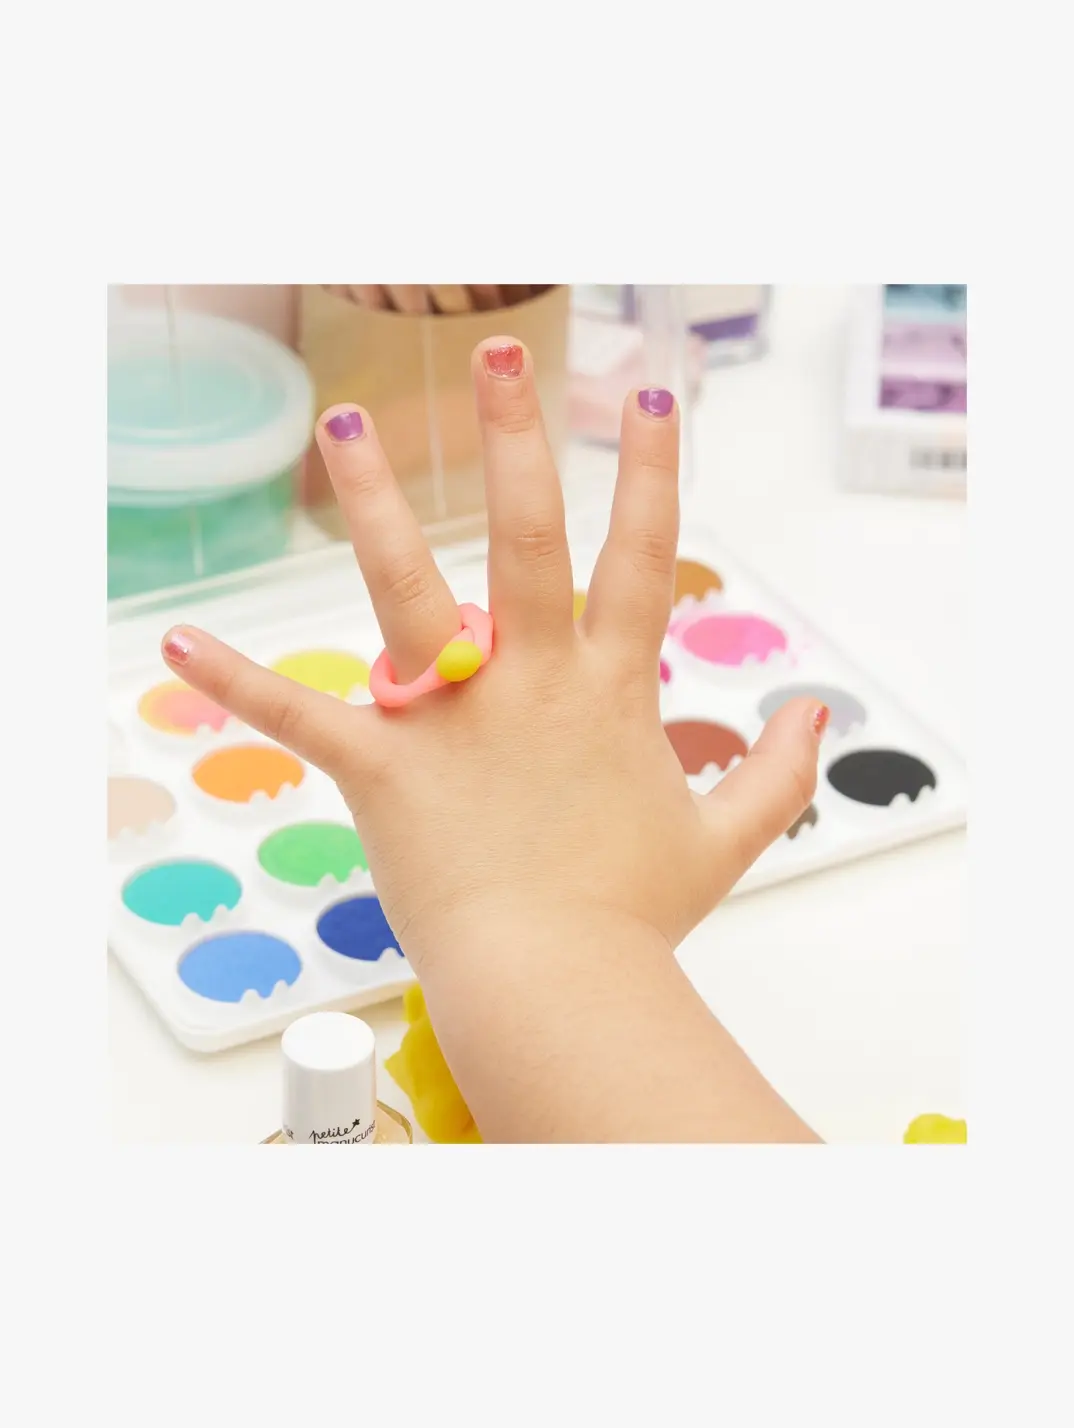 Baby Ashu Pretend Play with Color Nail Polish - Kids Nail Art Toys - YouTube